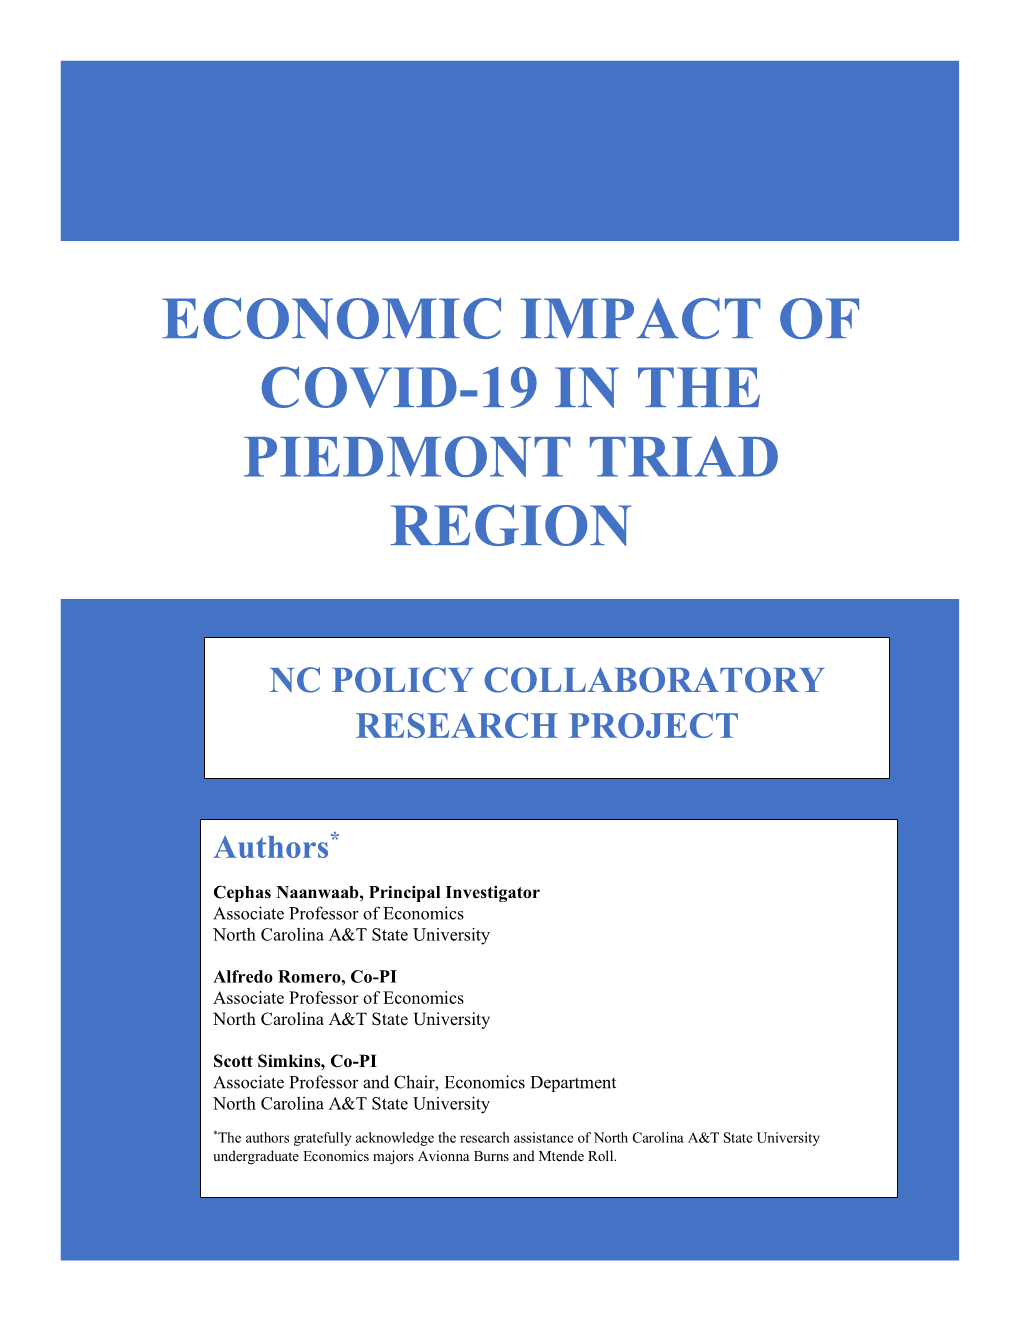 Economic Impact of Covid-19 in the Piedmont Triad Region